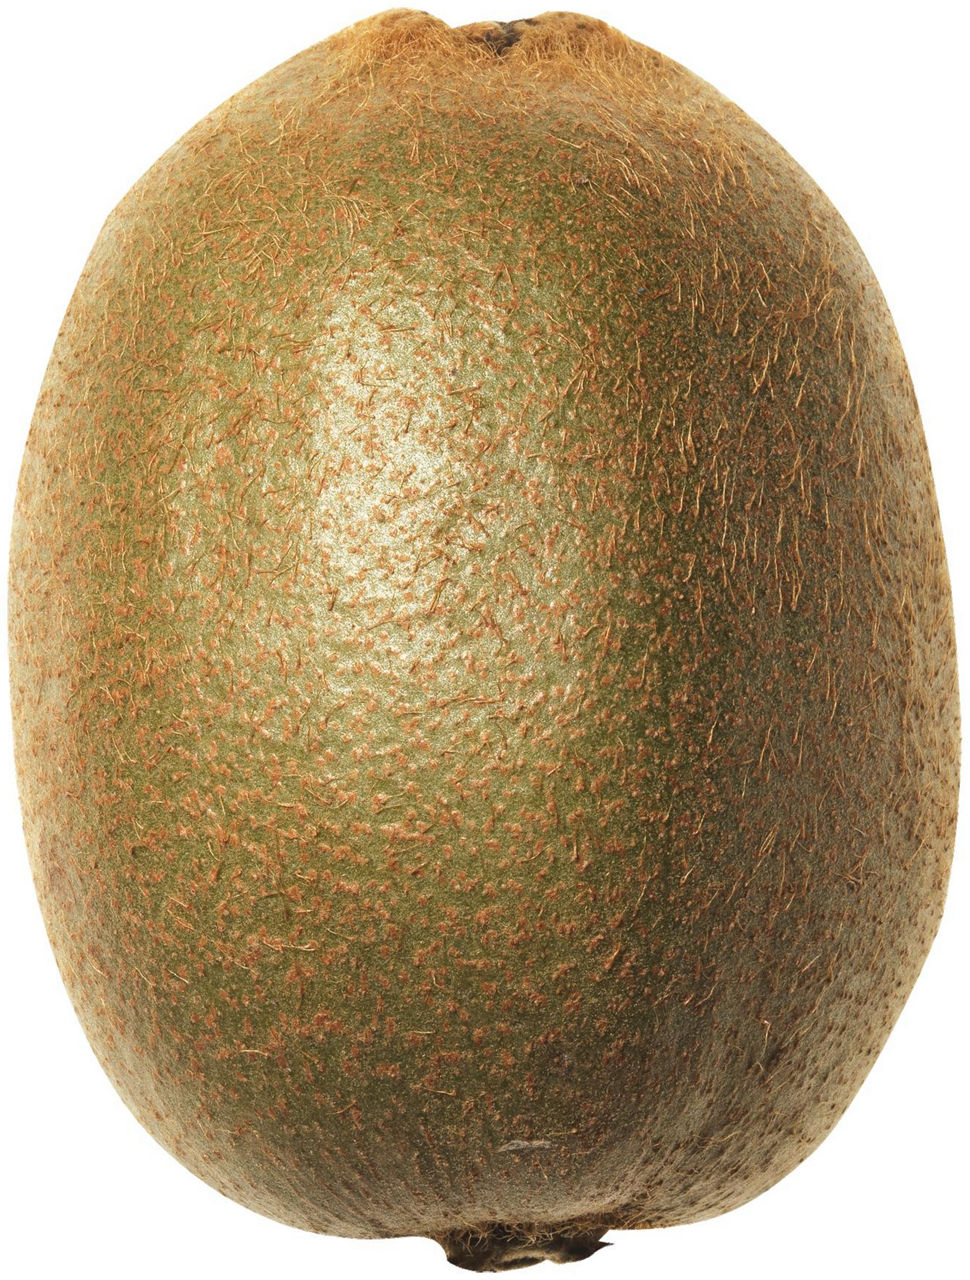 Kiwi kg 1 - 0